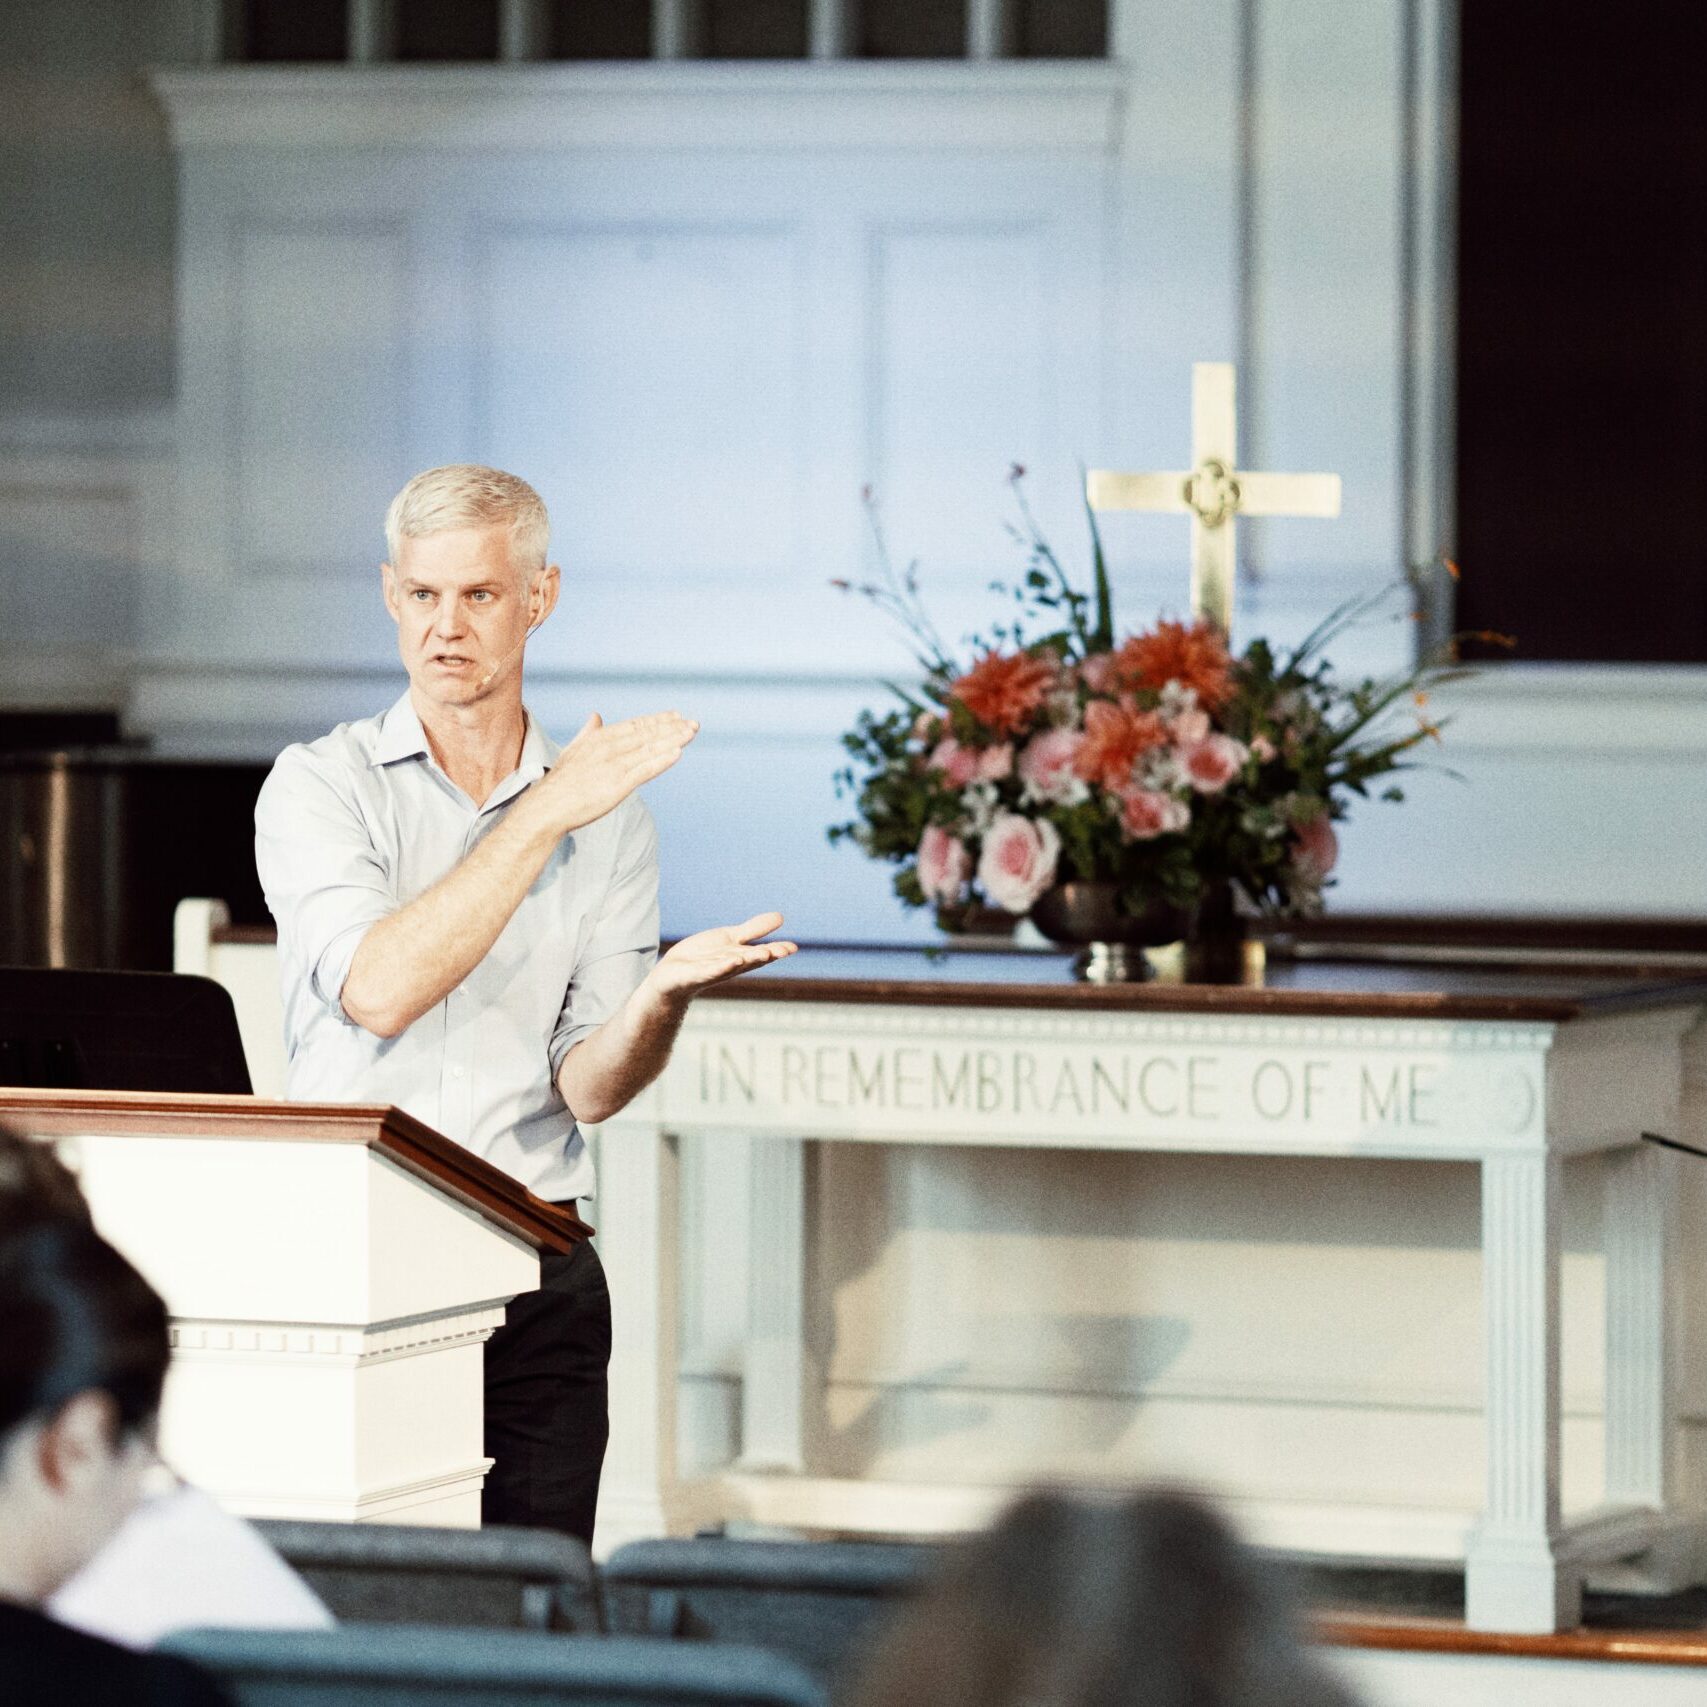 Pastor Stephen Sharkey preaching